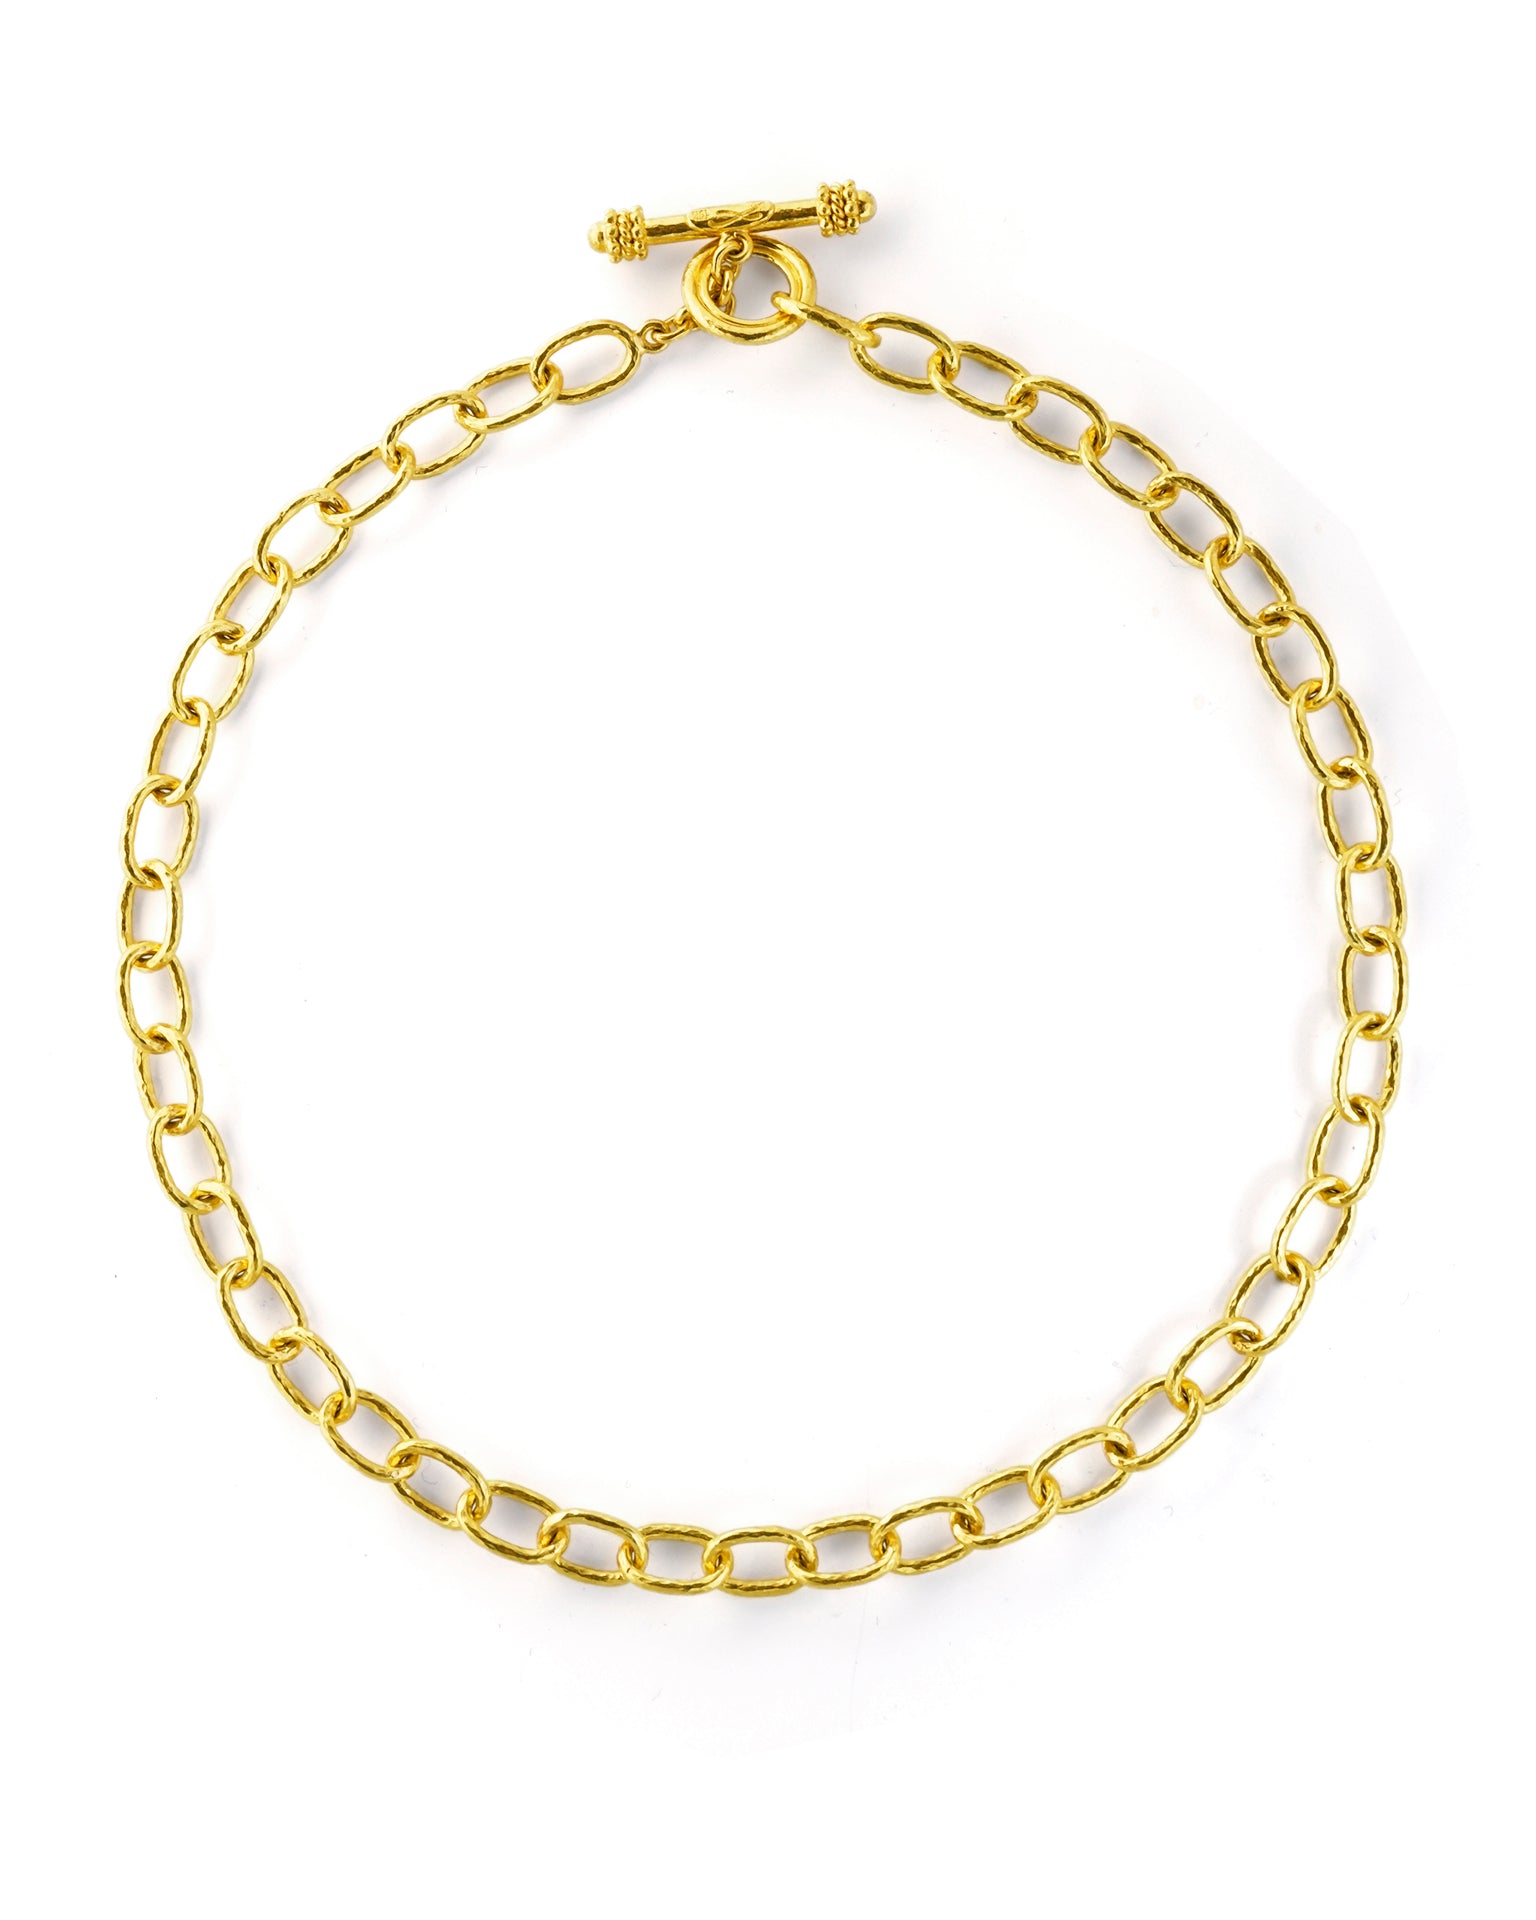 Elizabeth Locke Small “Volterra” Chain Link Necklace